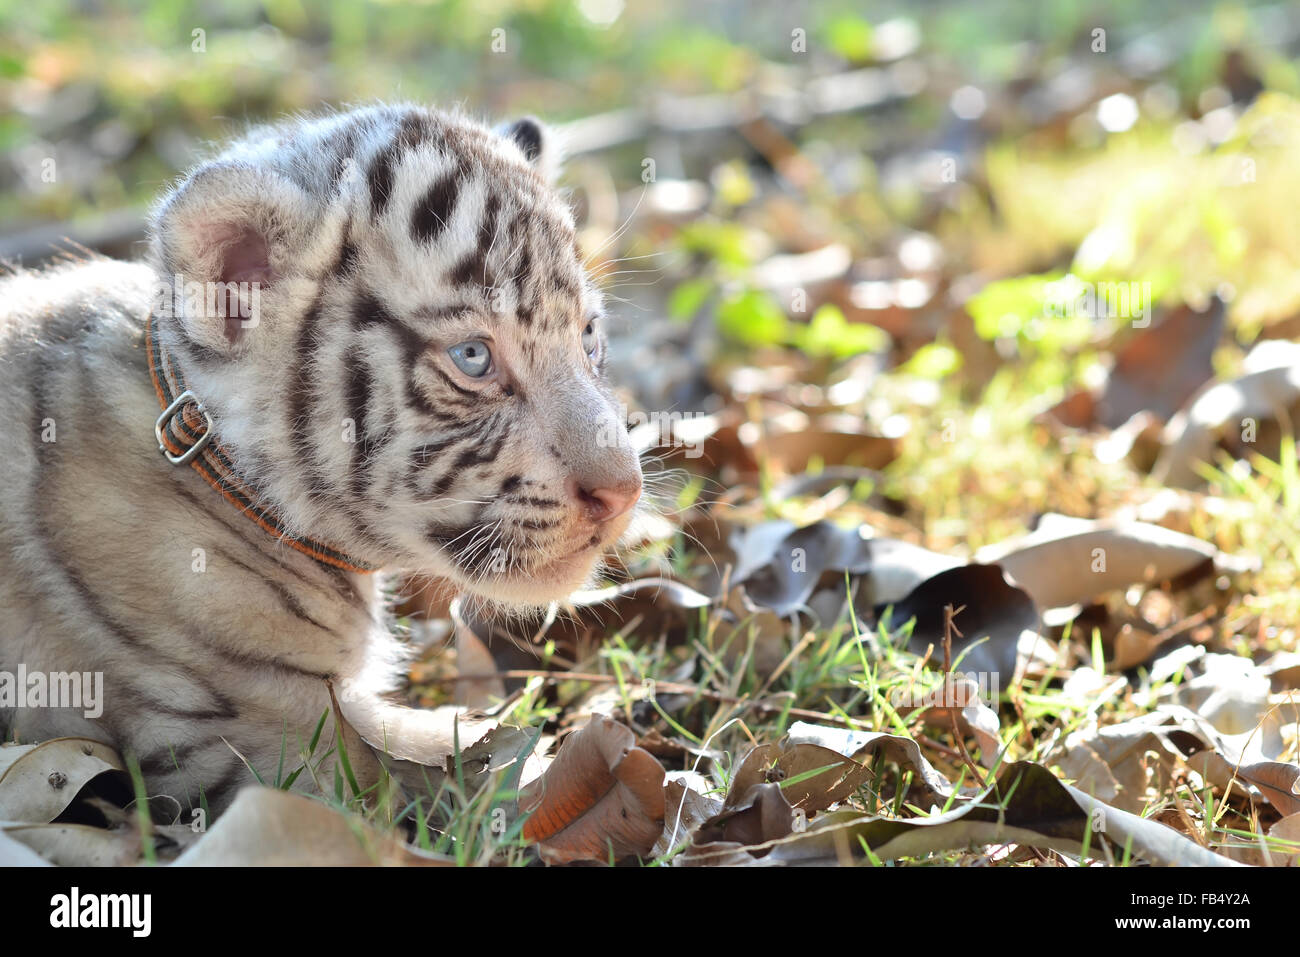 Beautiful white baby tiger 🐯.so - Amazing Animal Photos